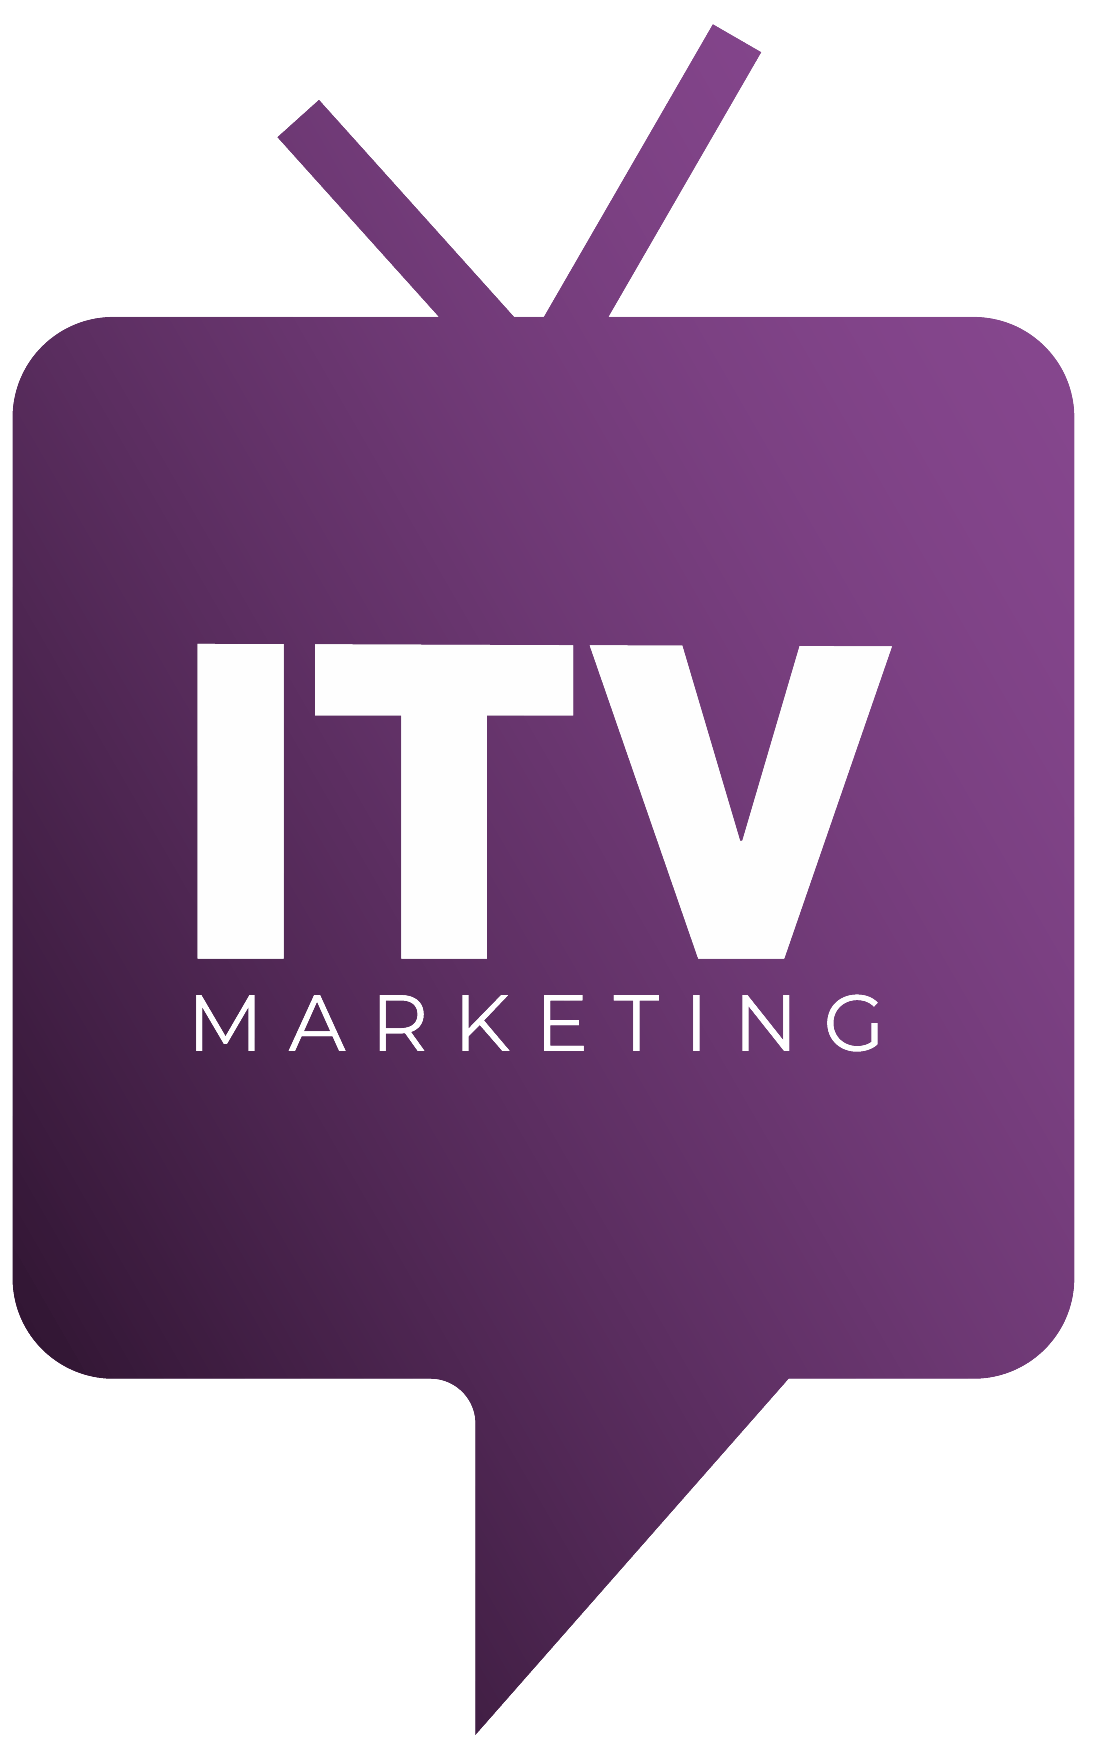 InTheVisual Marketing Logo